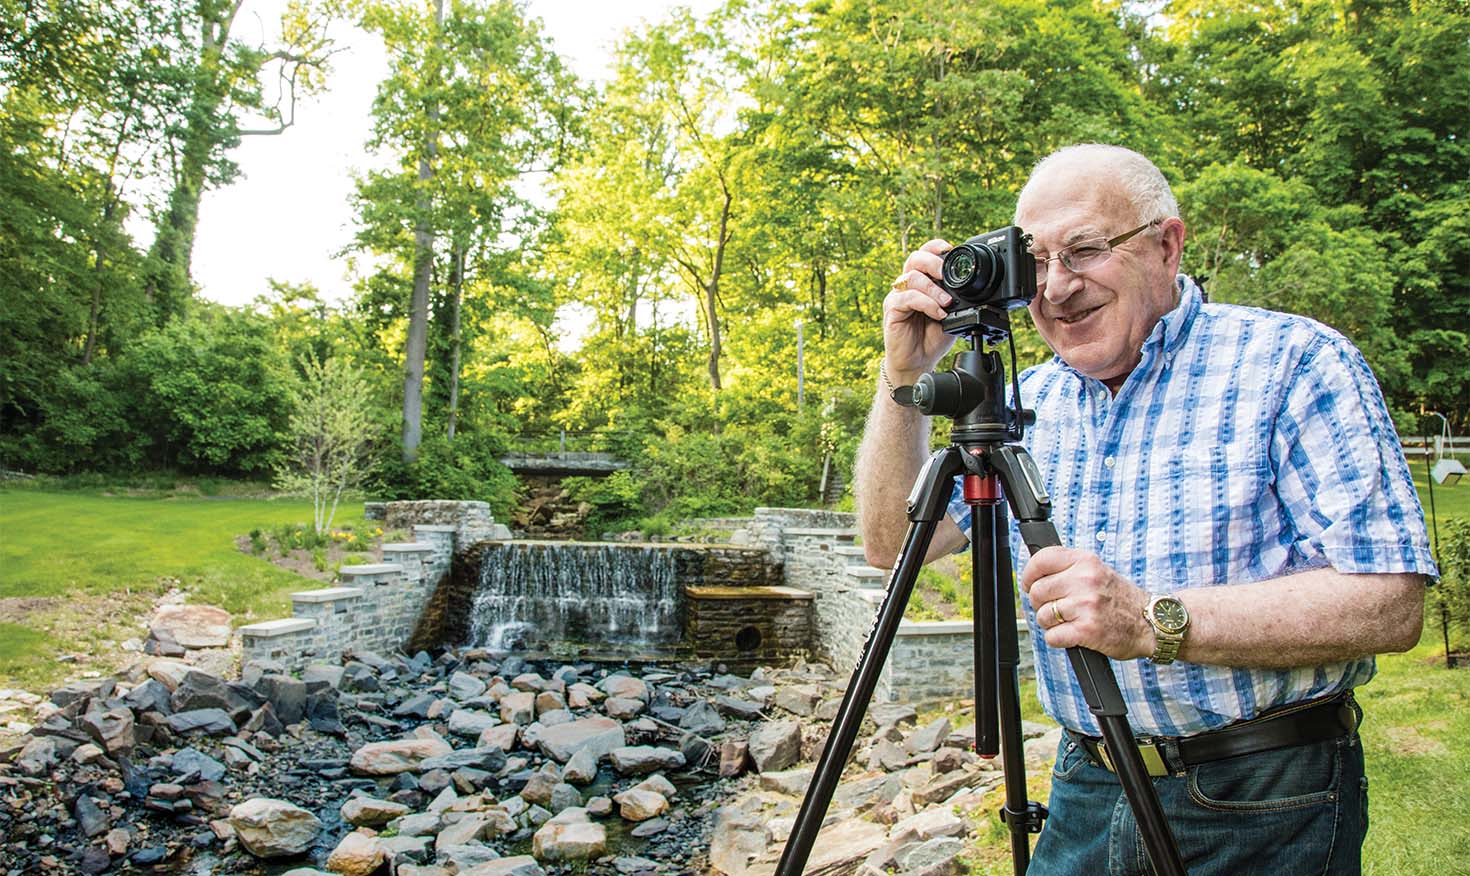 Senior man taking photos outdoors with a camera on a tripod